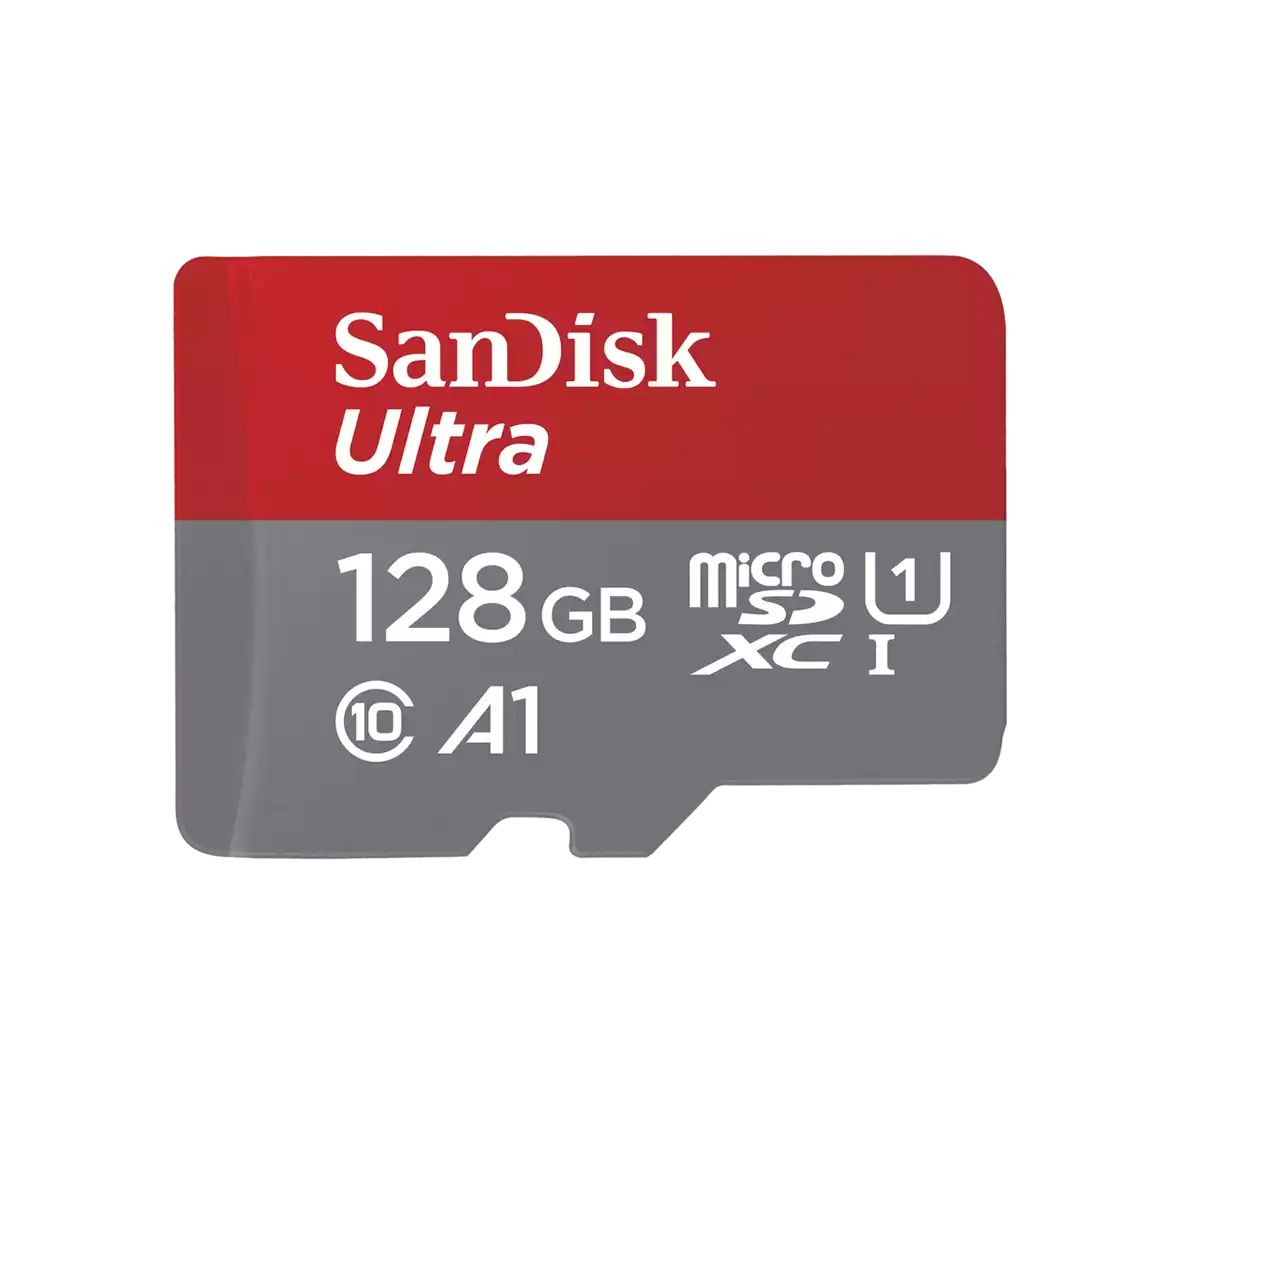 SanDisk Ultra 128 Go MicroSDXC UHS-I Classe 10 - SECOMP France